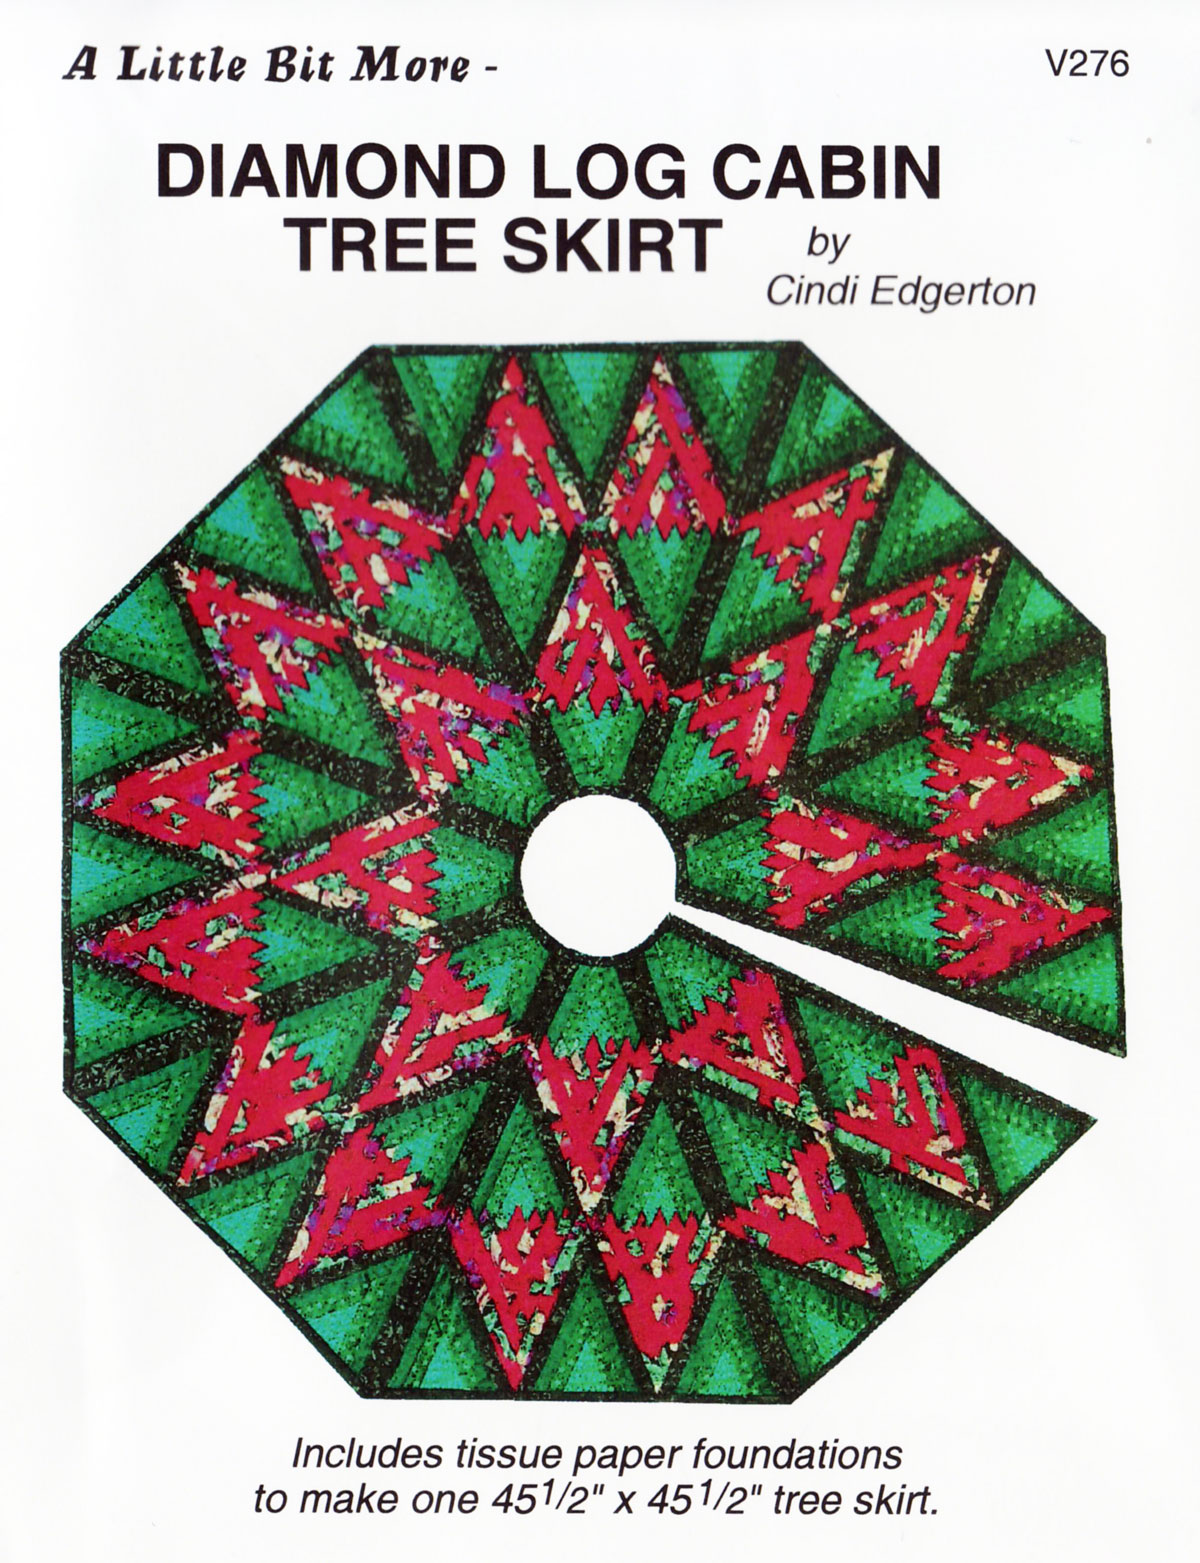 A-Little-Bit-More-Diamond-Log-Cabin-Tree-Skirt-quilt-sewing-pattern-Cindi-Edgerton-front